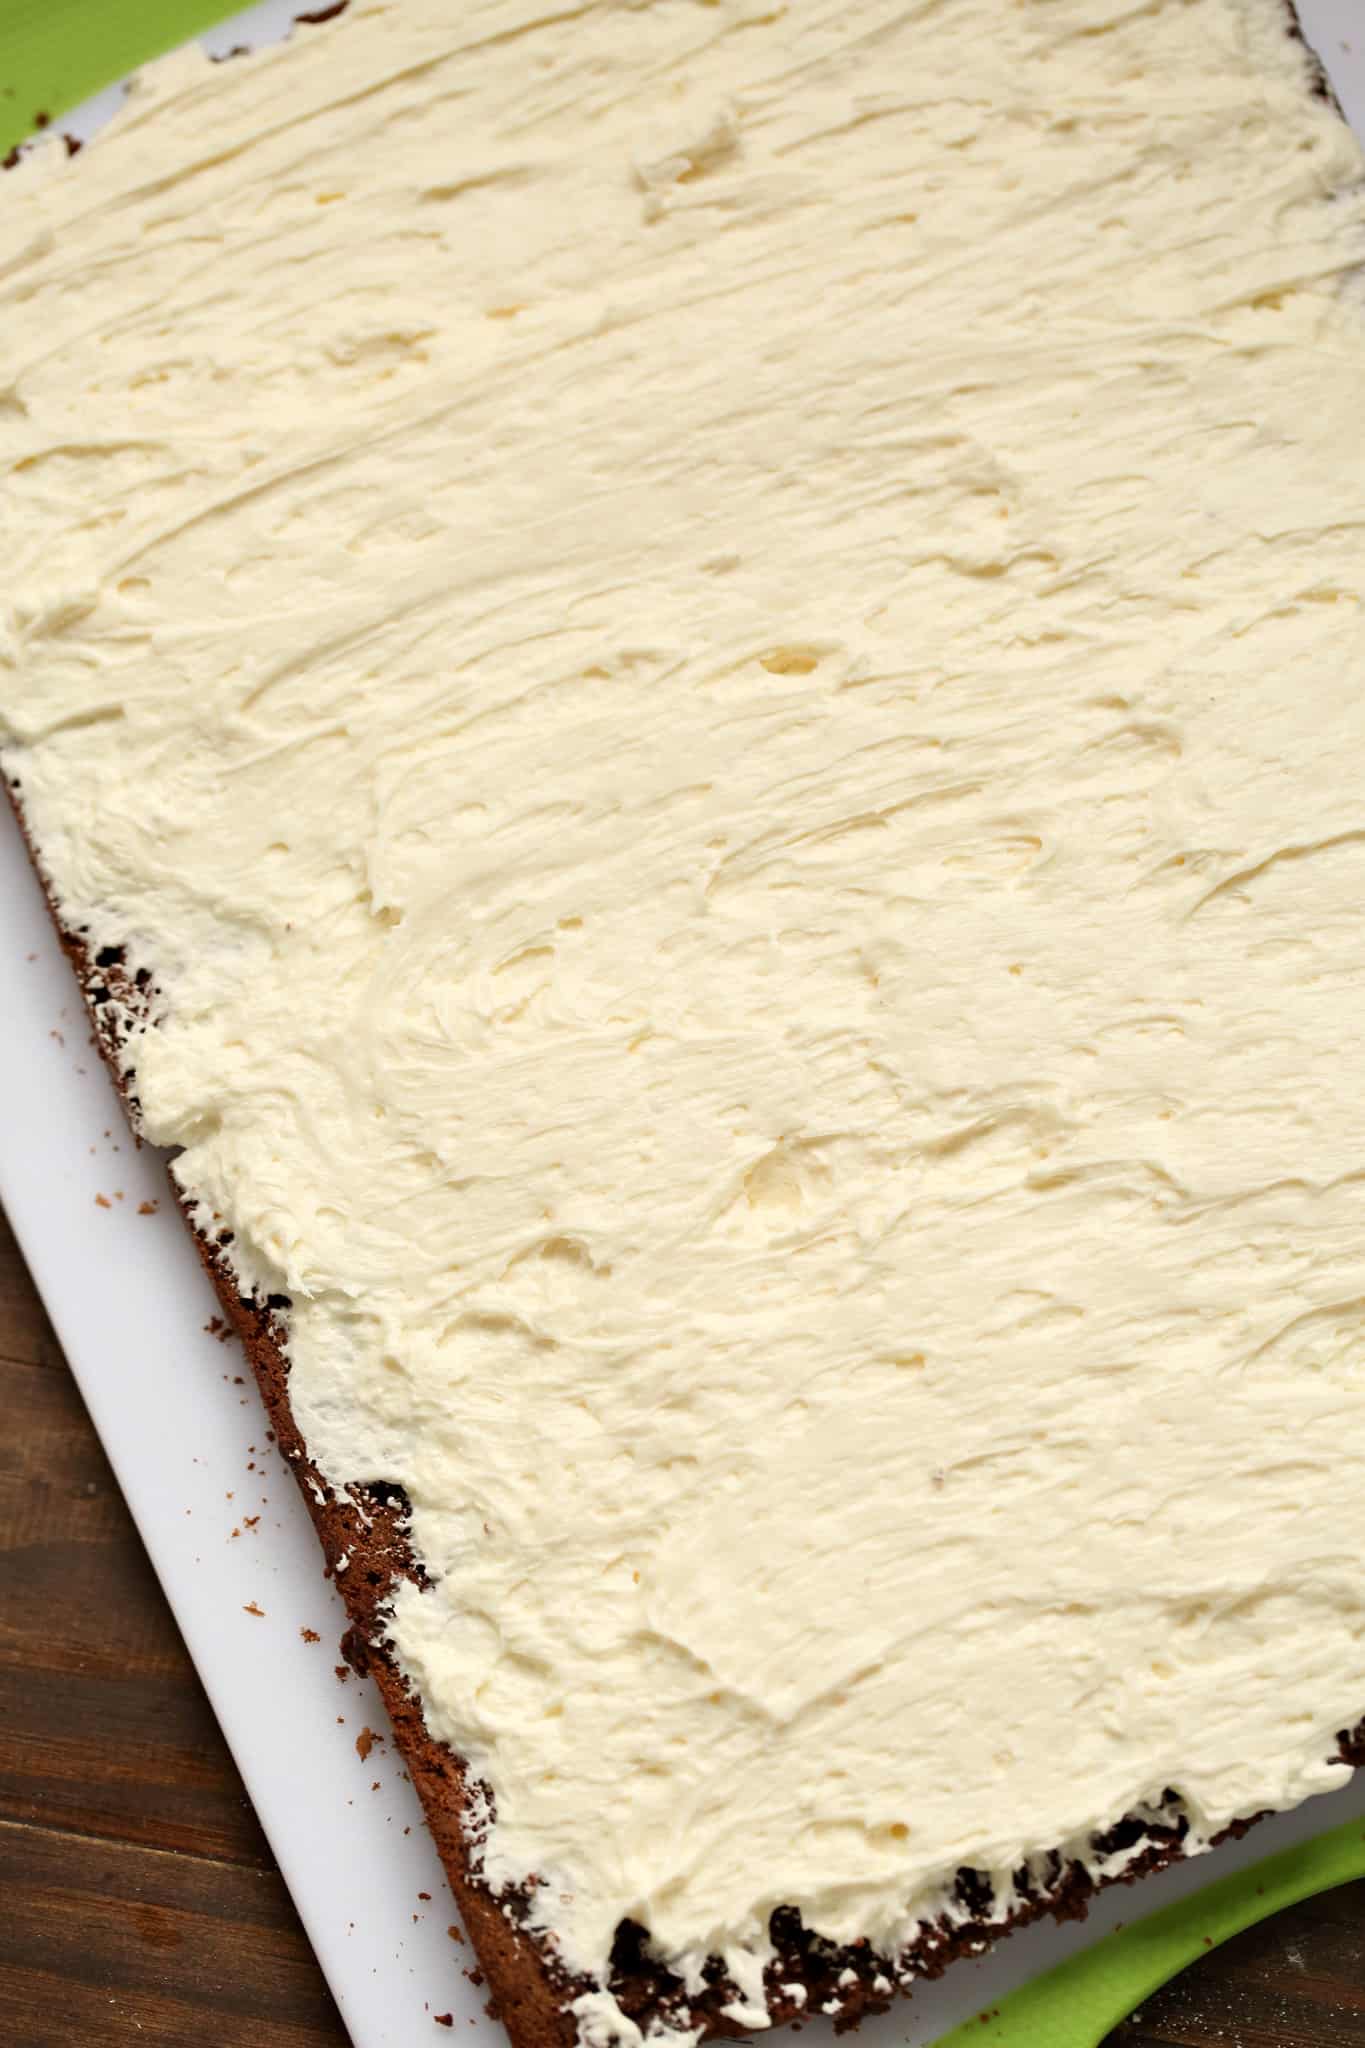 cream mixture spread evenly on top of brownie half. 